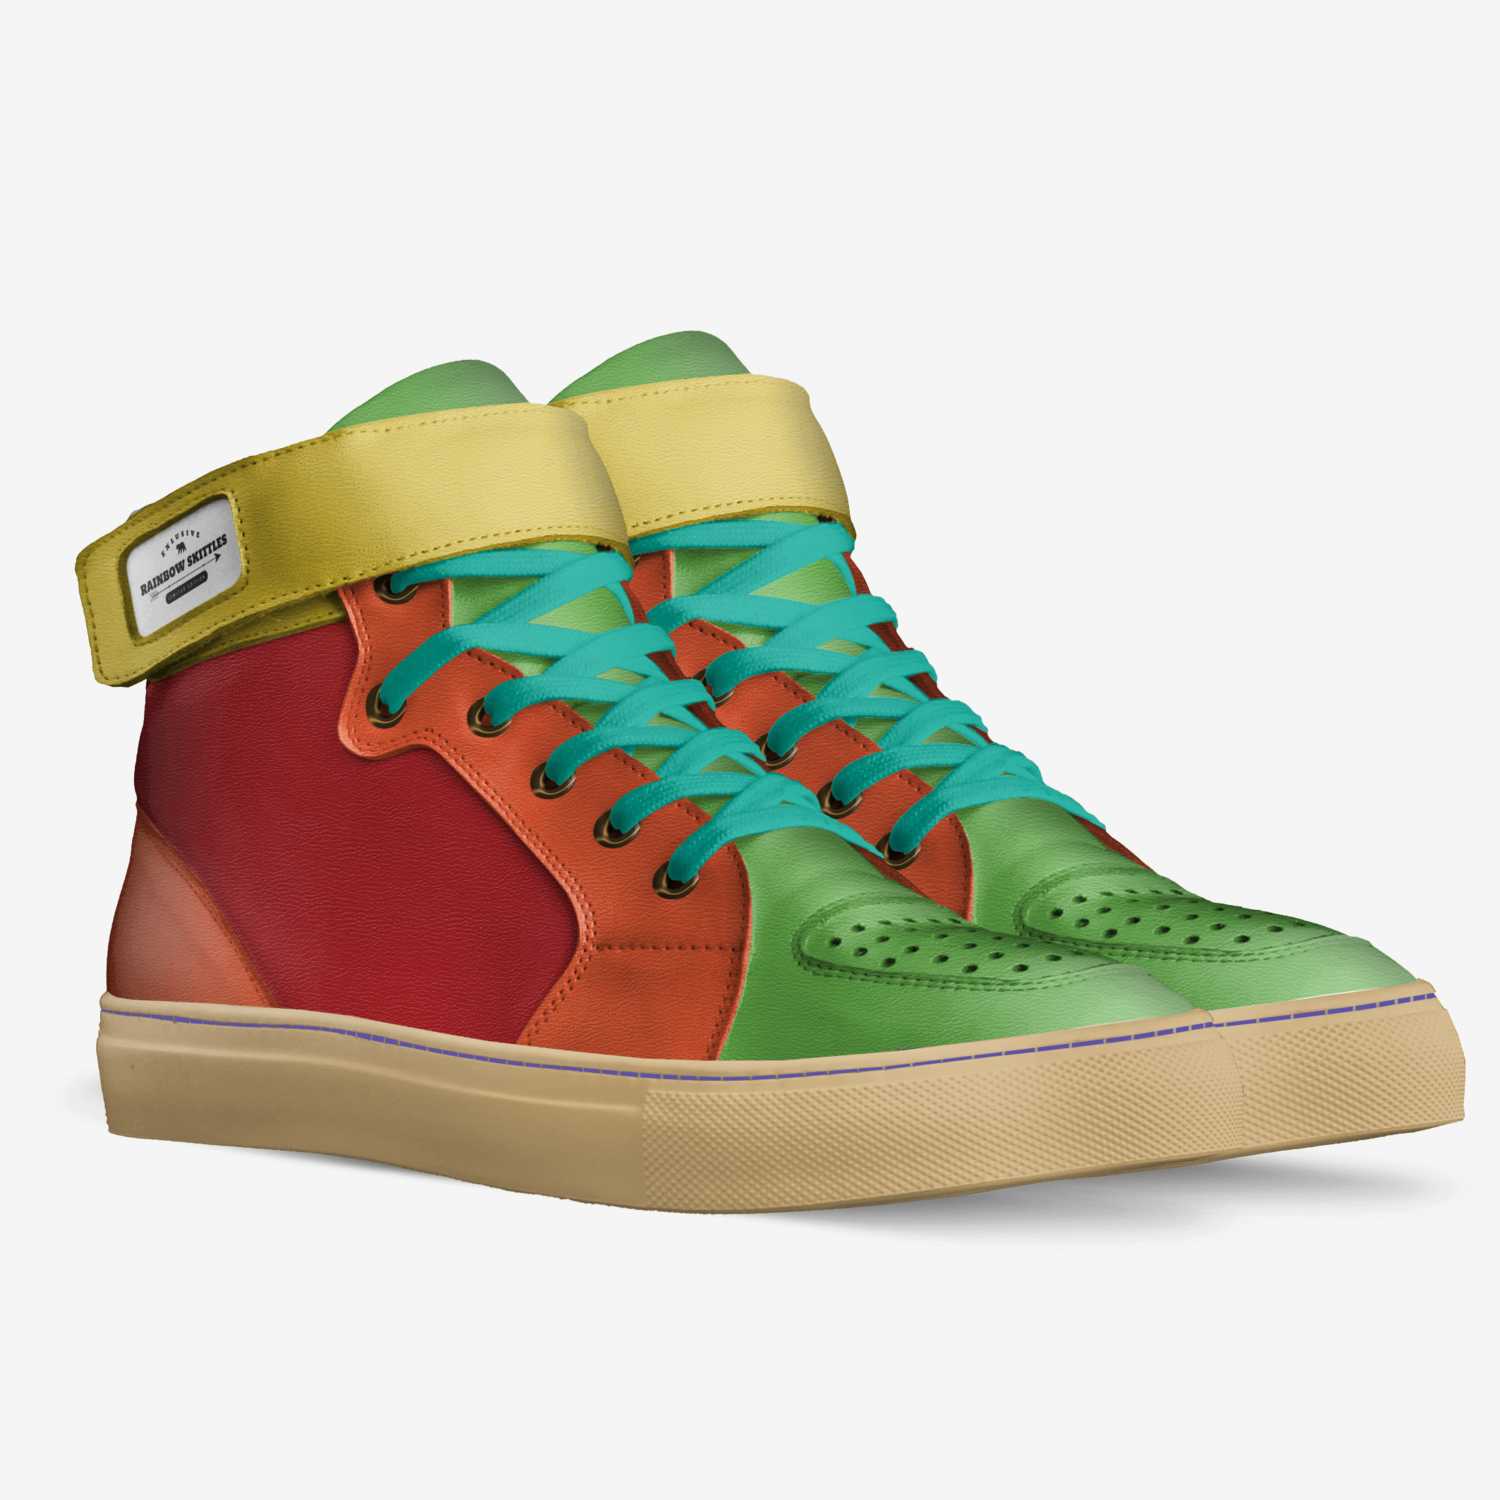 Vuggeviser tælle vores rainbow skittles | A Custom Shoe concept by Mackenzie Phillips